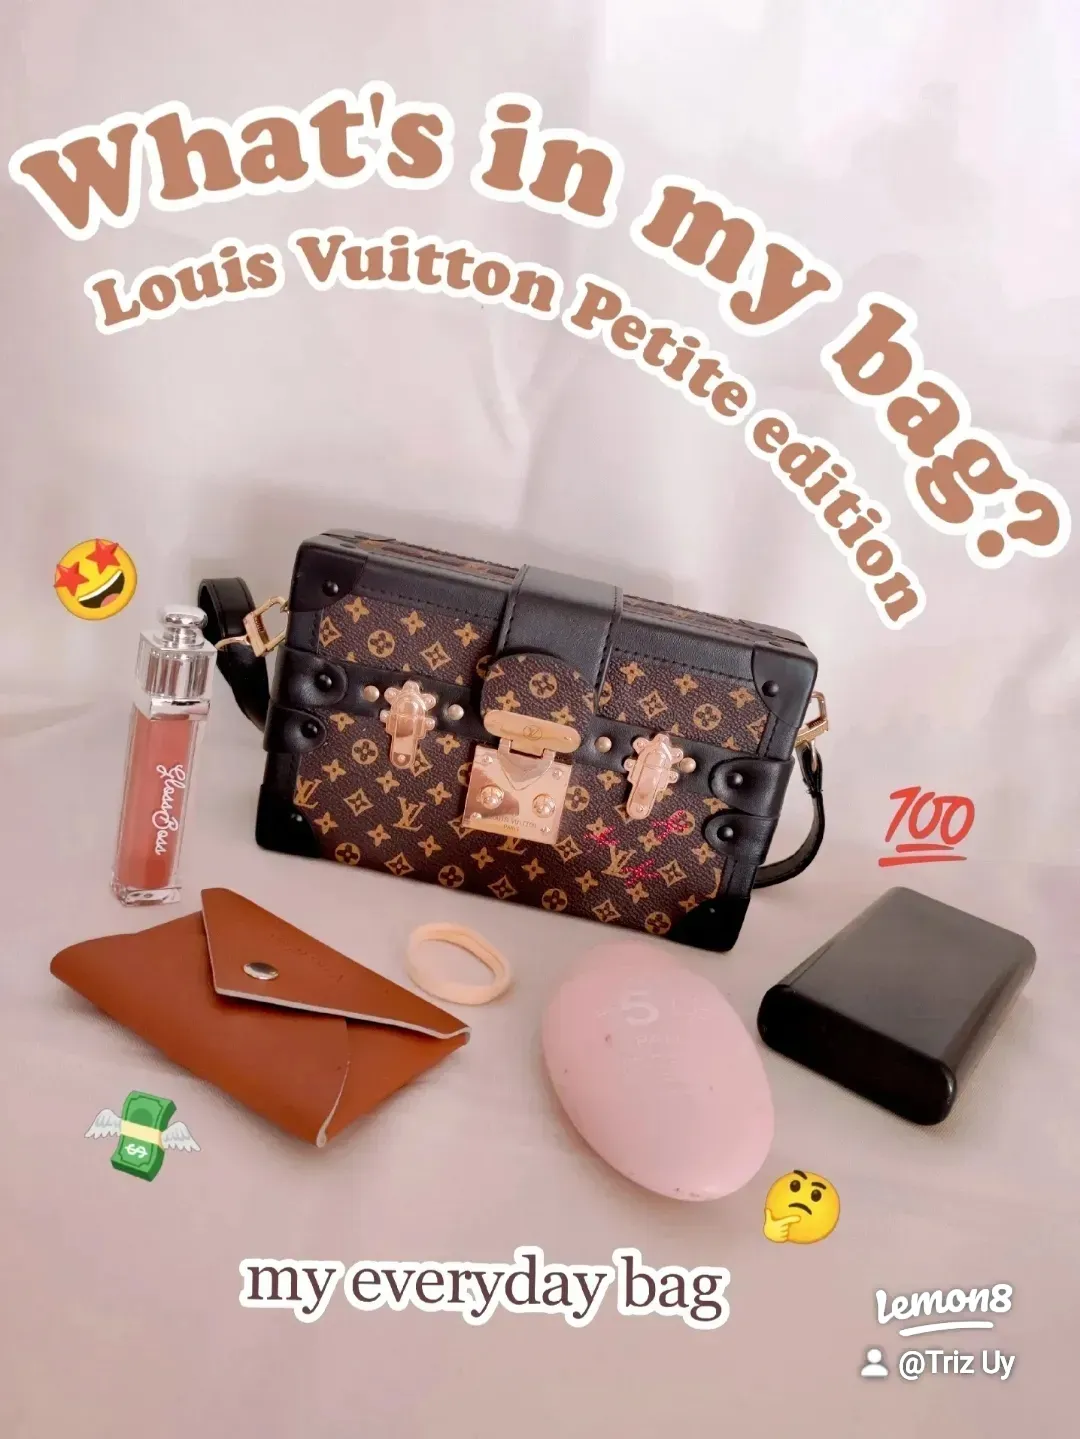 Does this bag make me look petite? lol : r/Louisvuitton